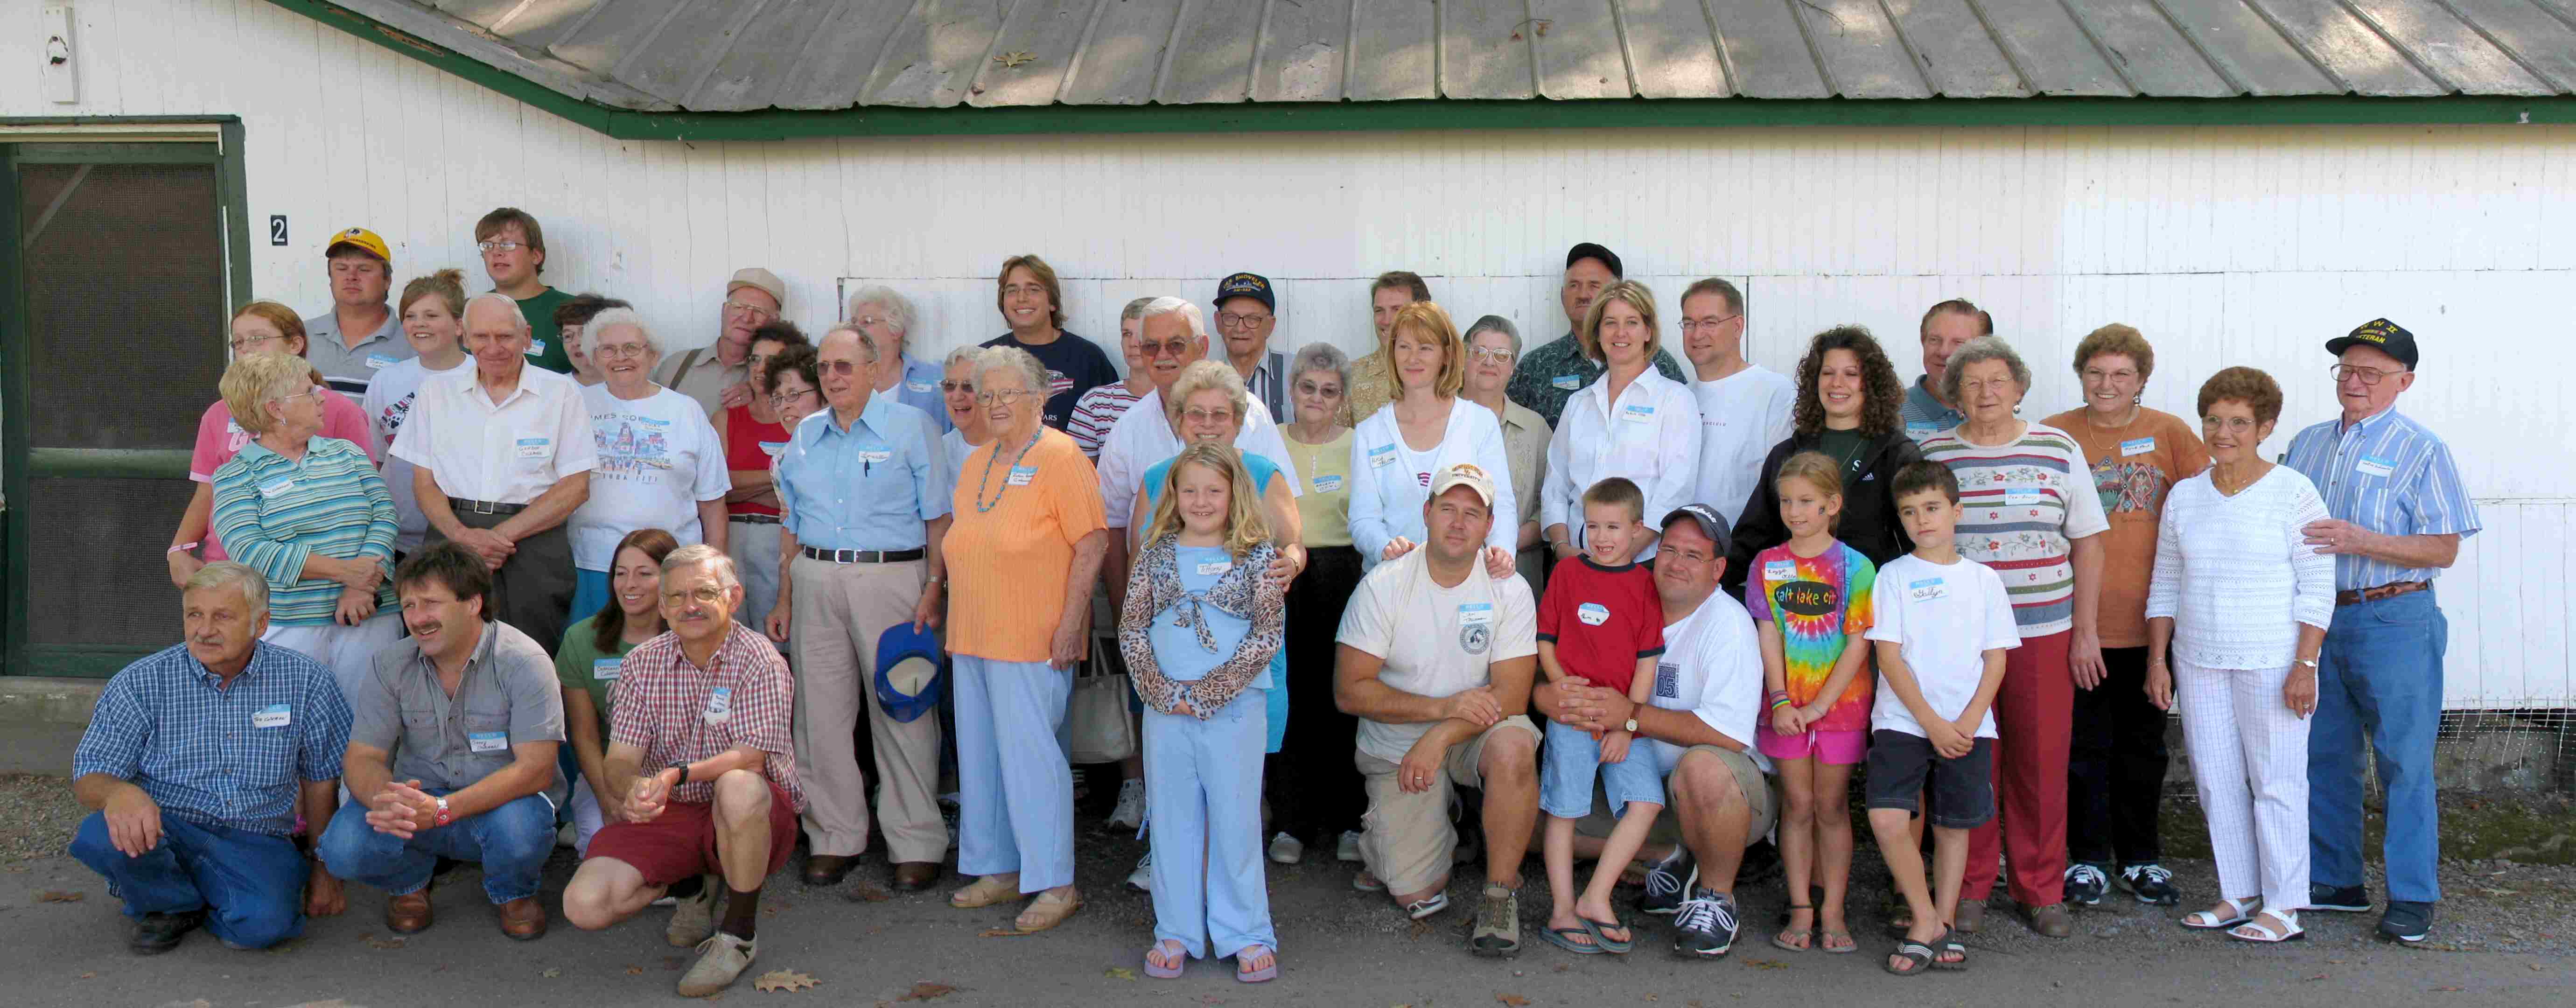 2005 Reunion Group Photo